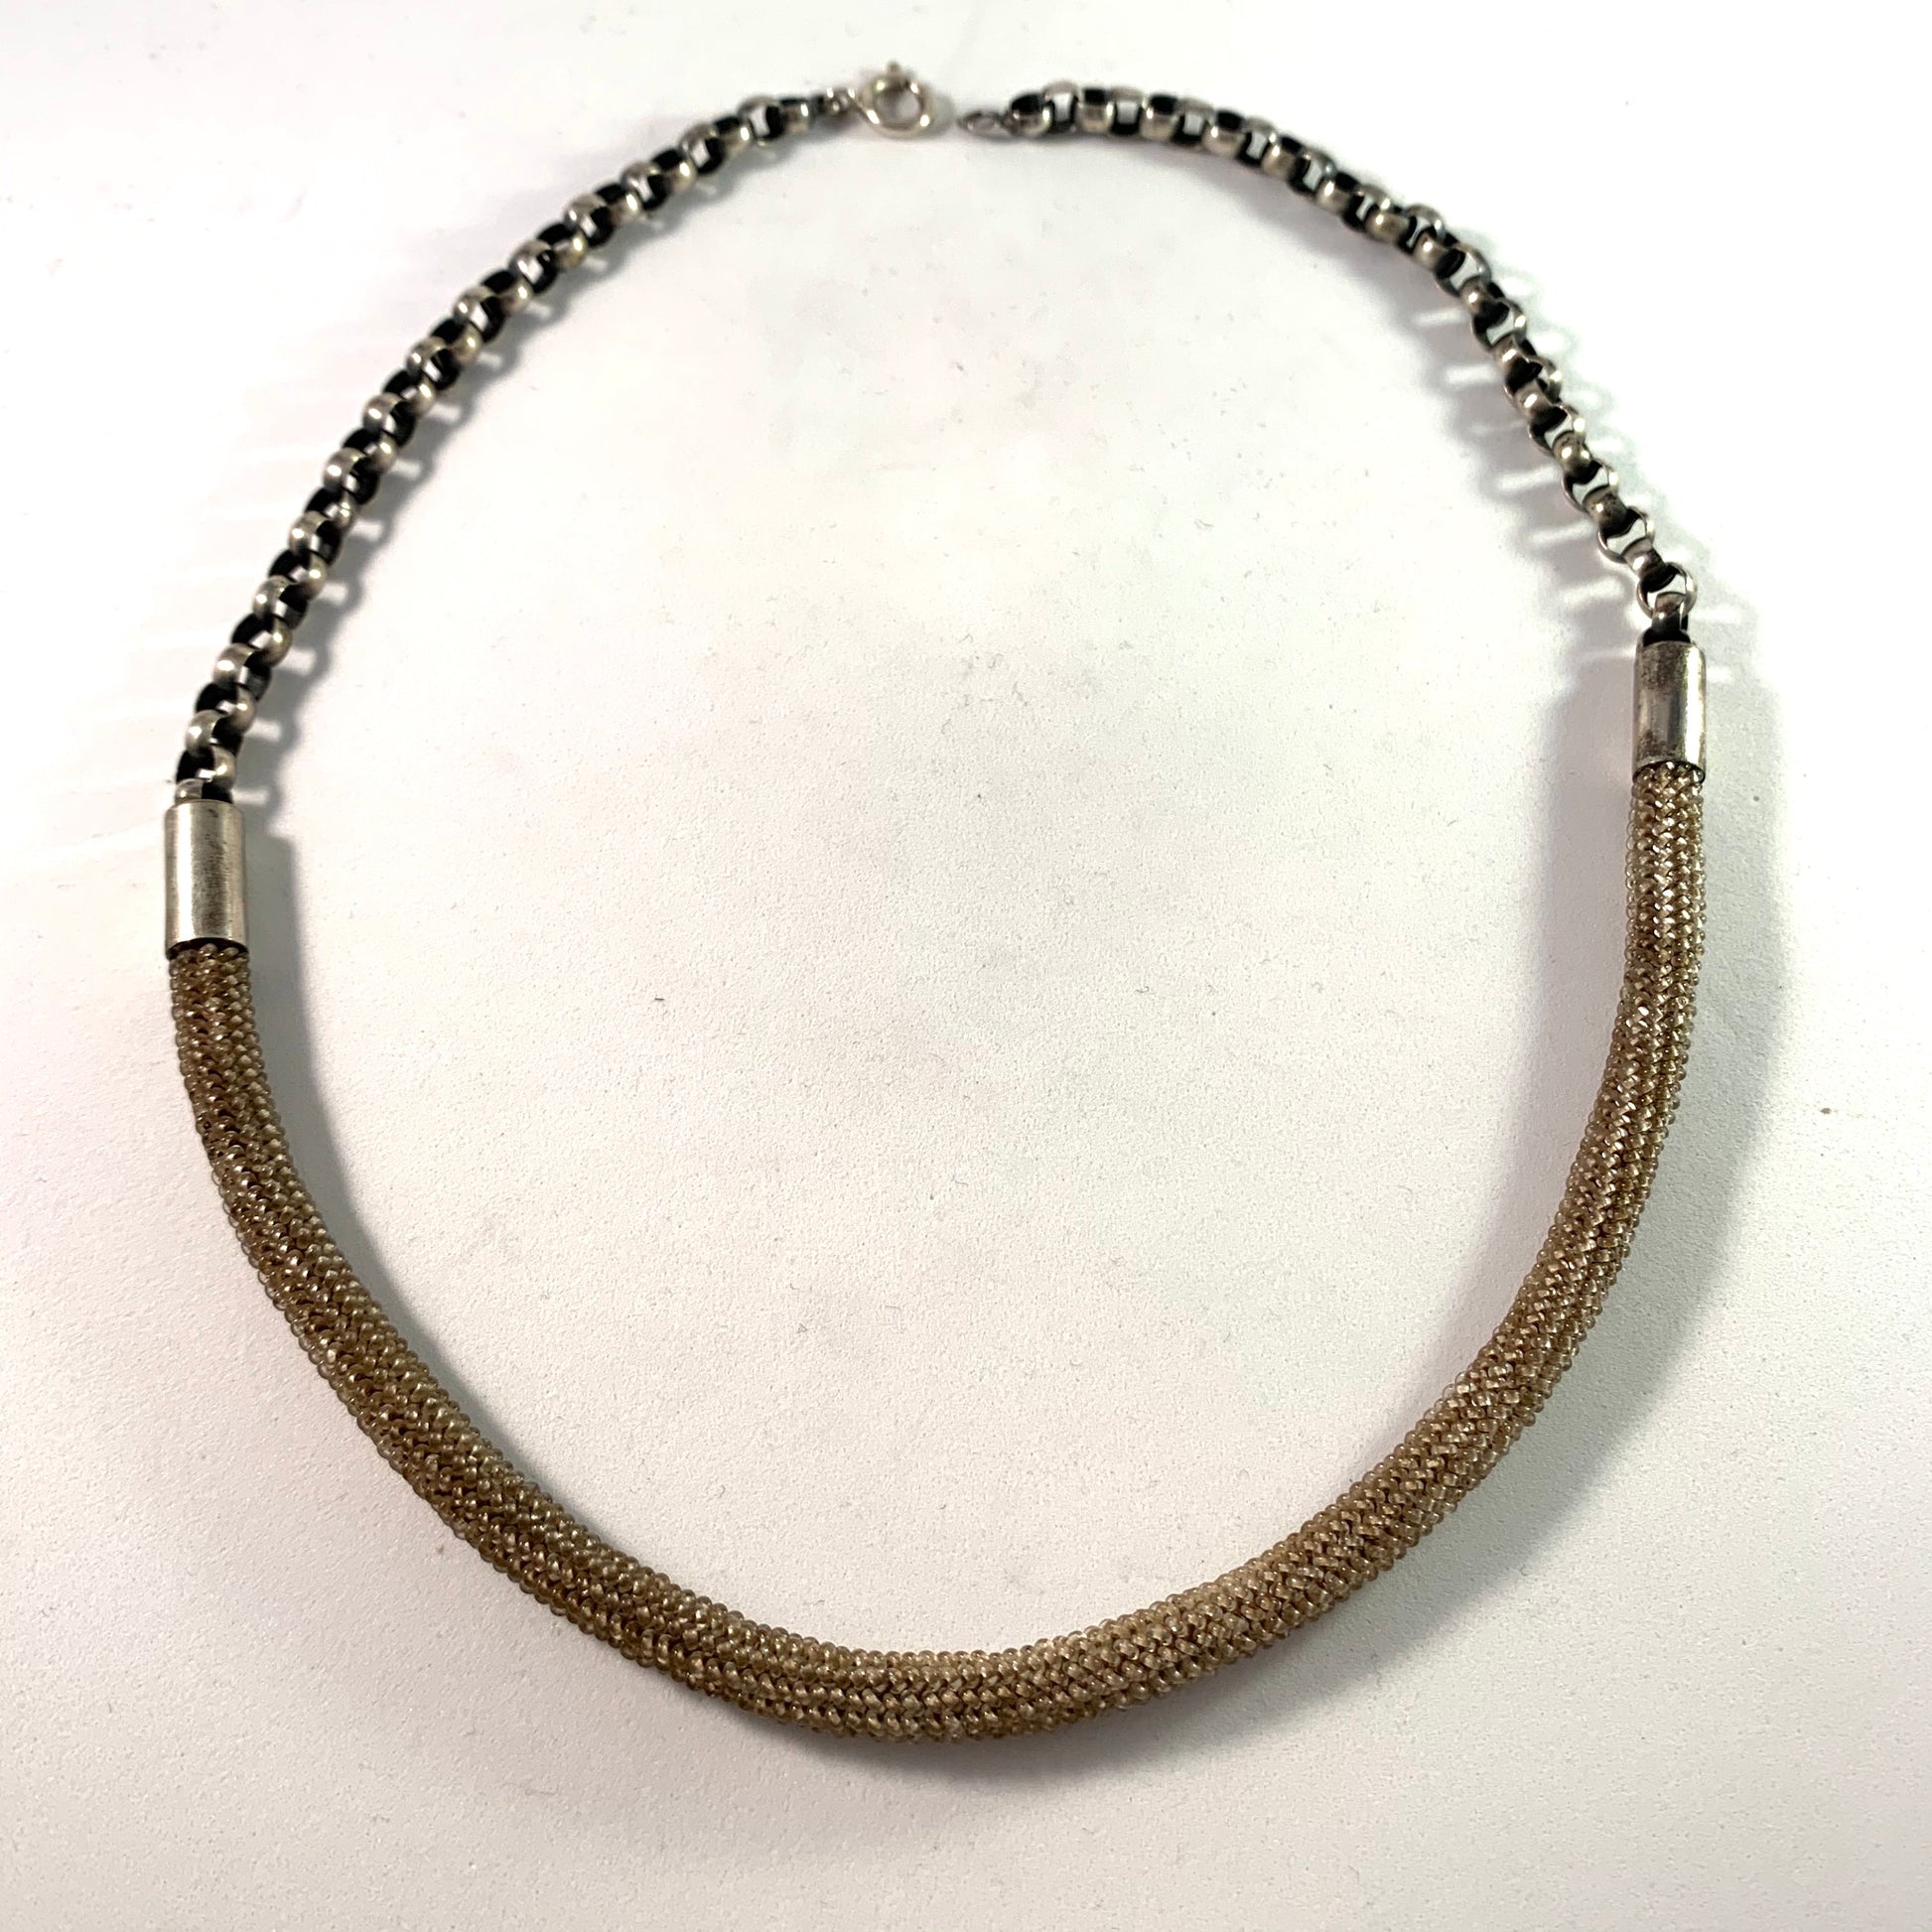 Alton, Sweden 1959 Silver Beads Necklace.